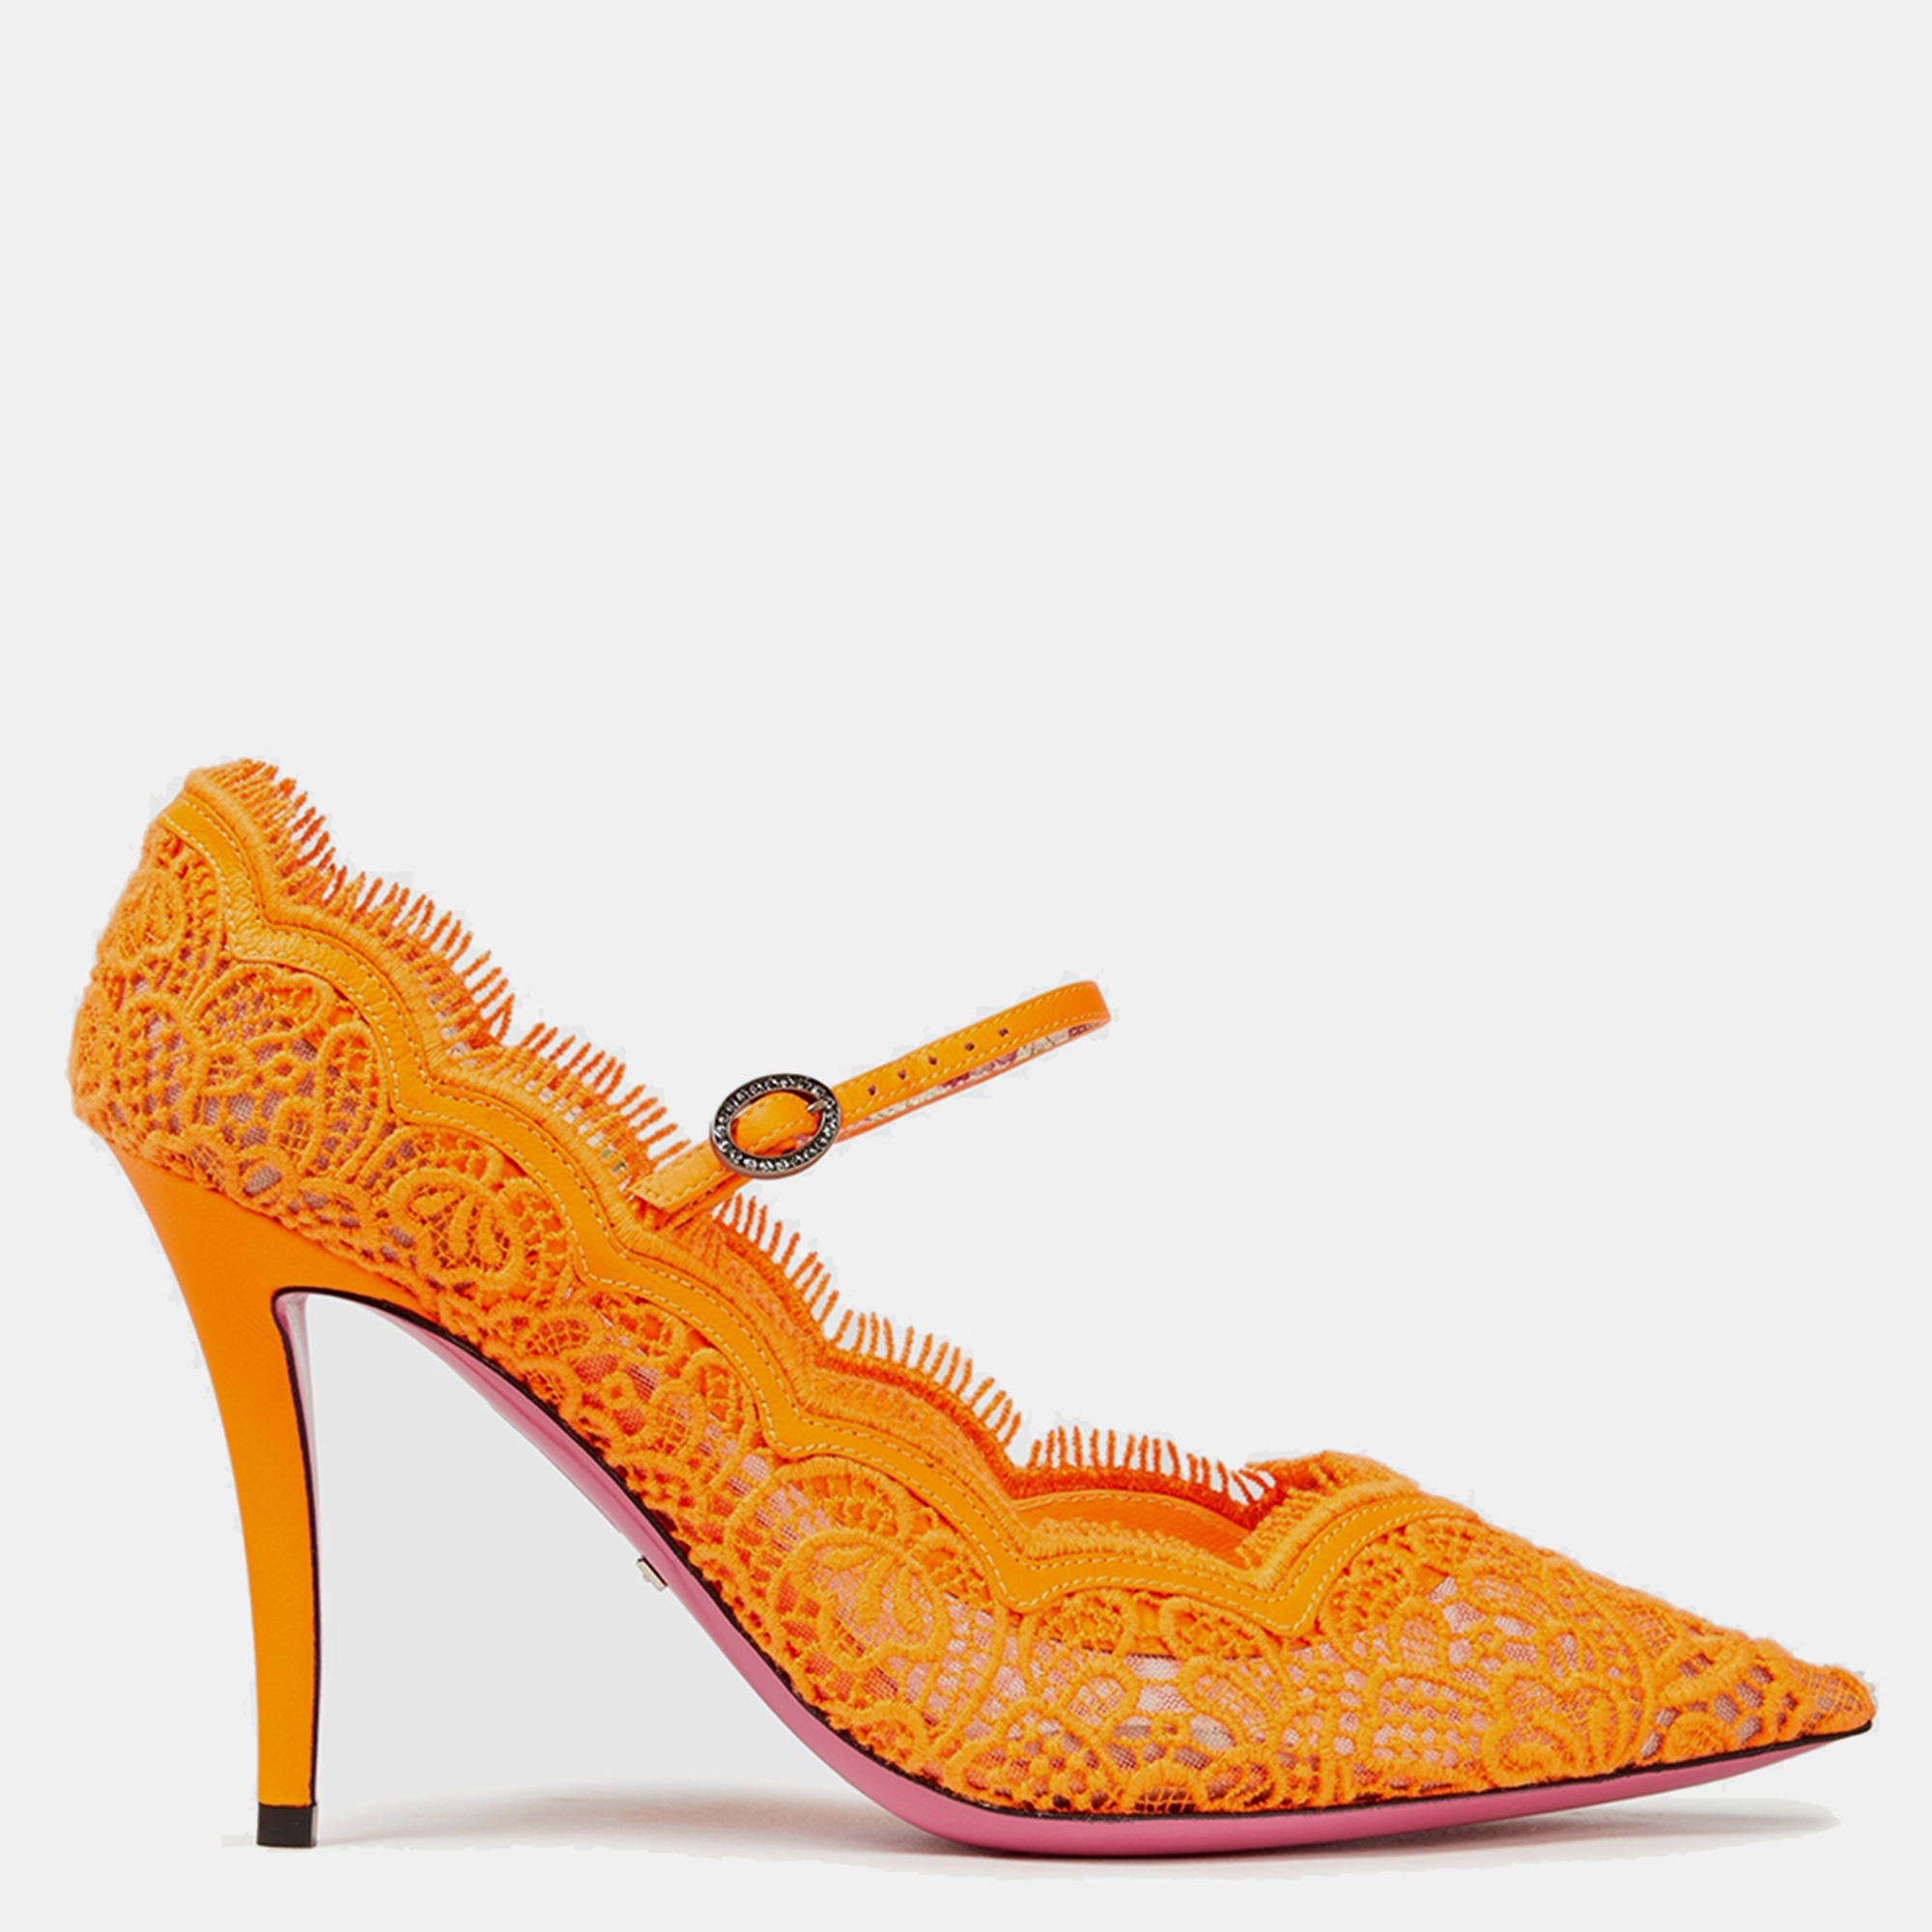 Gucci orange lace pointed toe pumps size 36.5